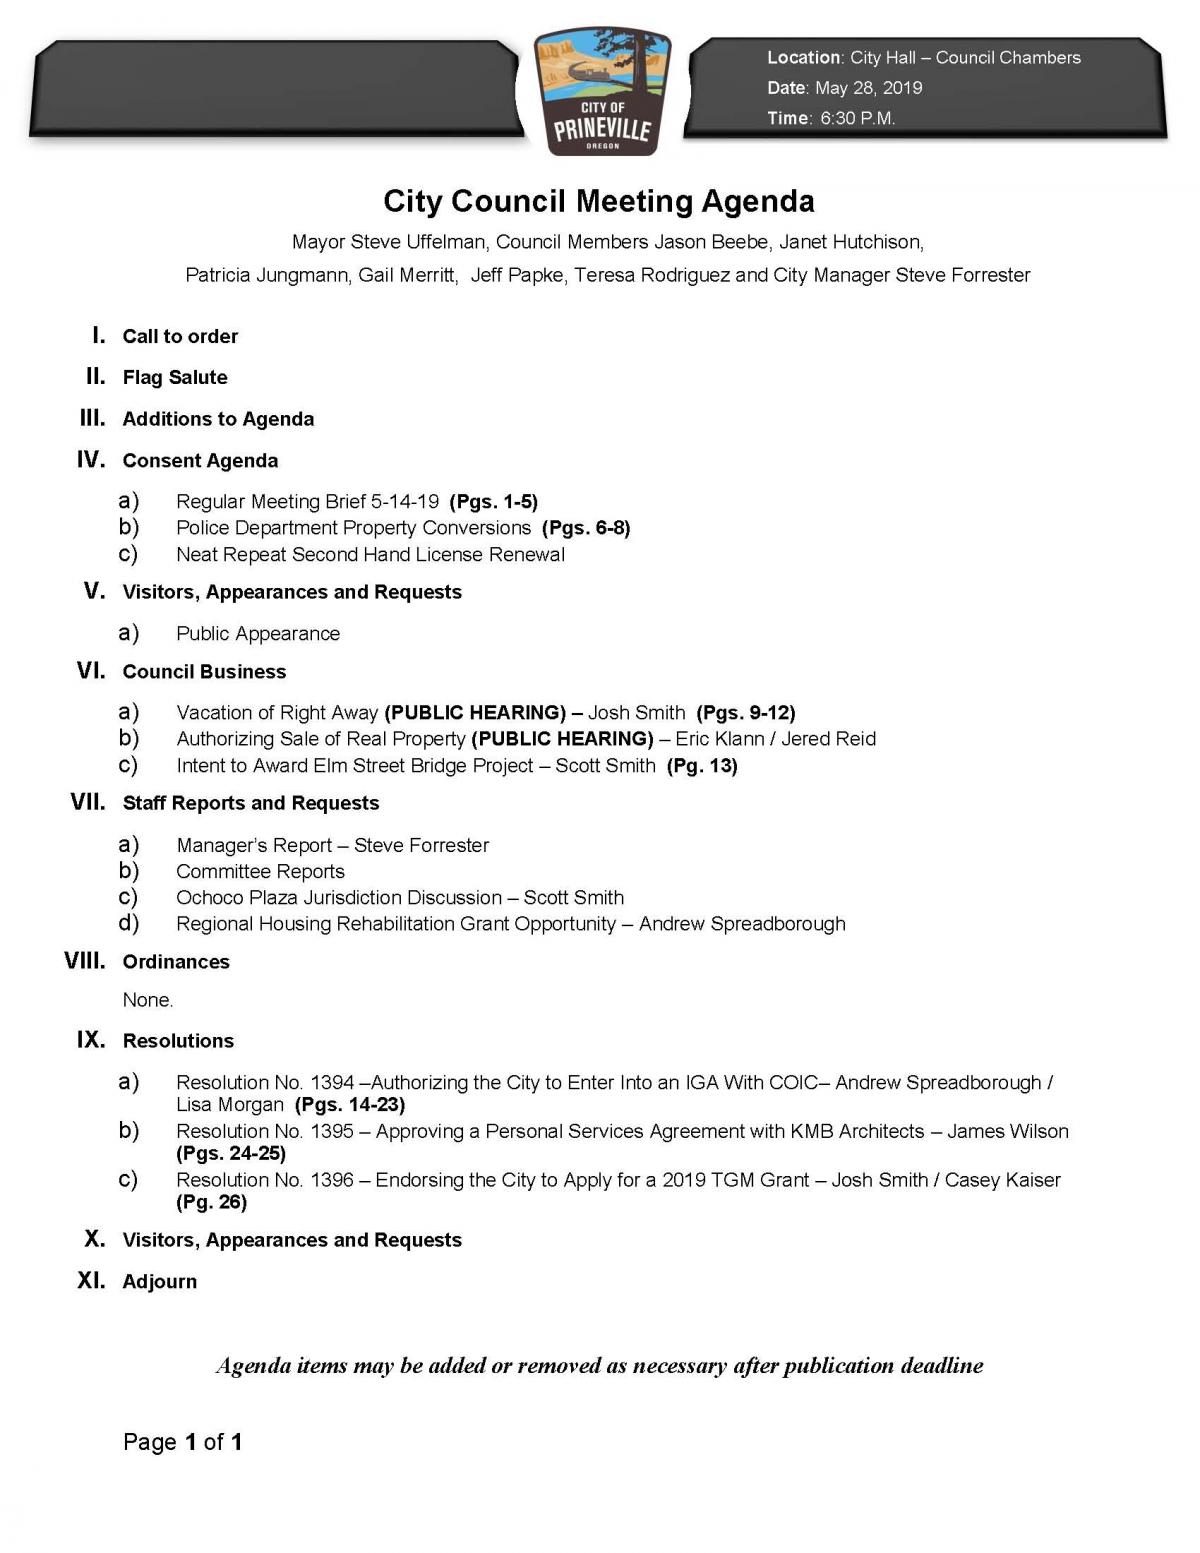 Council Agenda 5-28-19